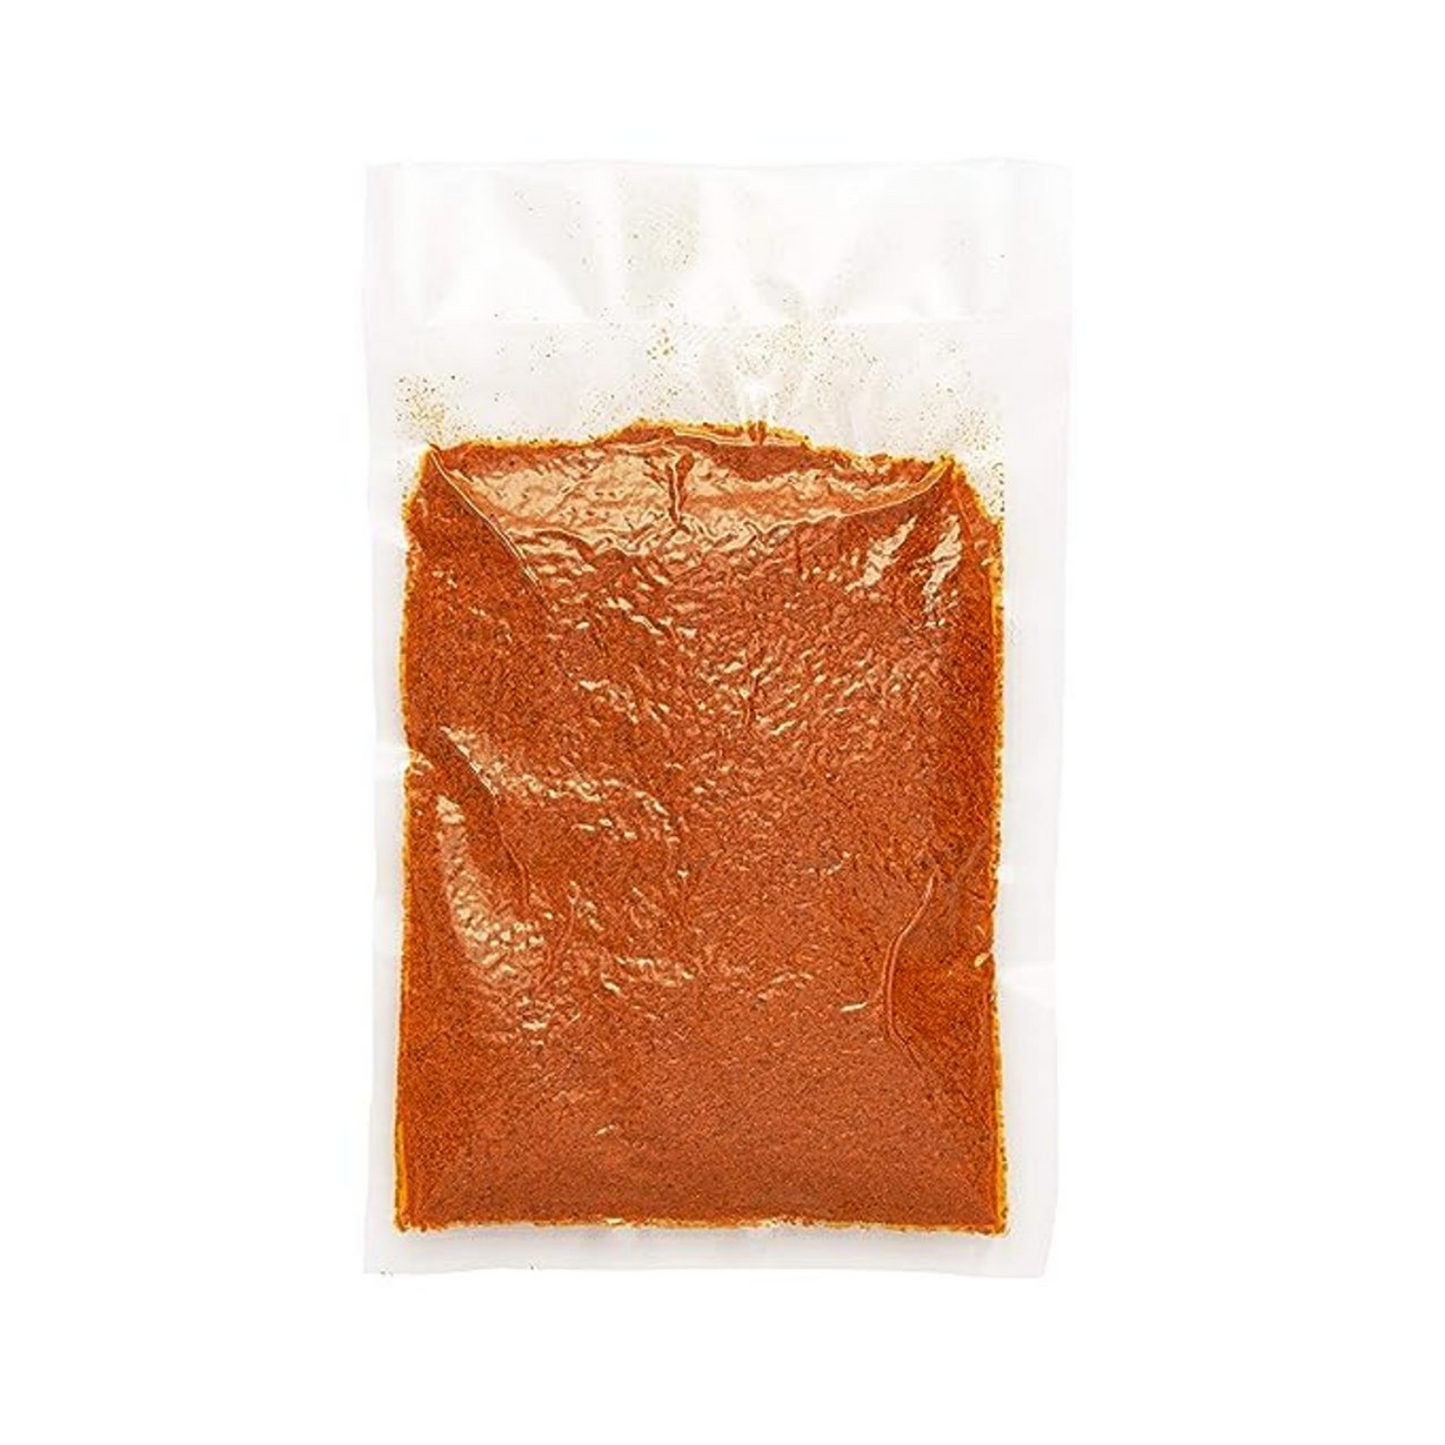 Gourmanity Piment D'Espelette Red Chili Pepper Powder Bag 8.8oz - Gourmanity